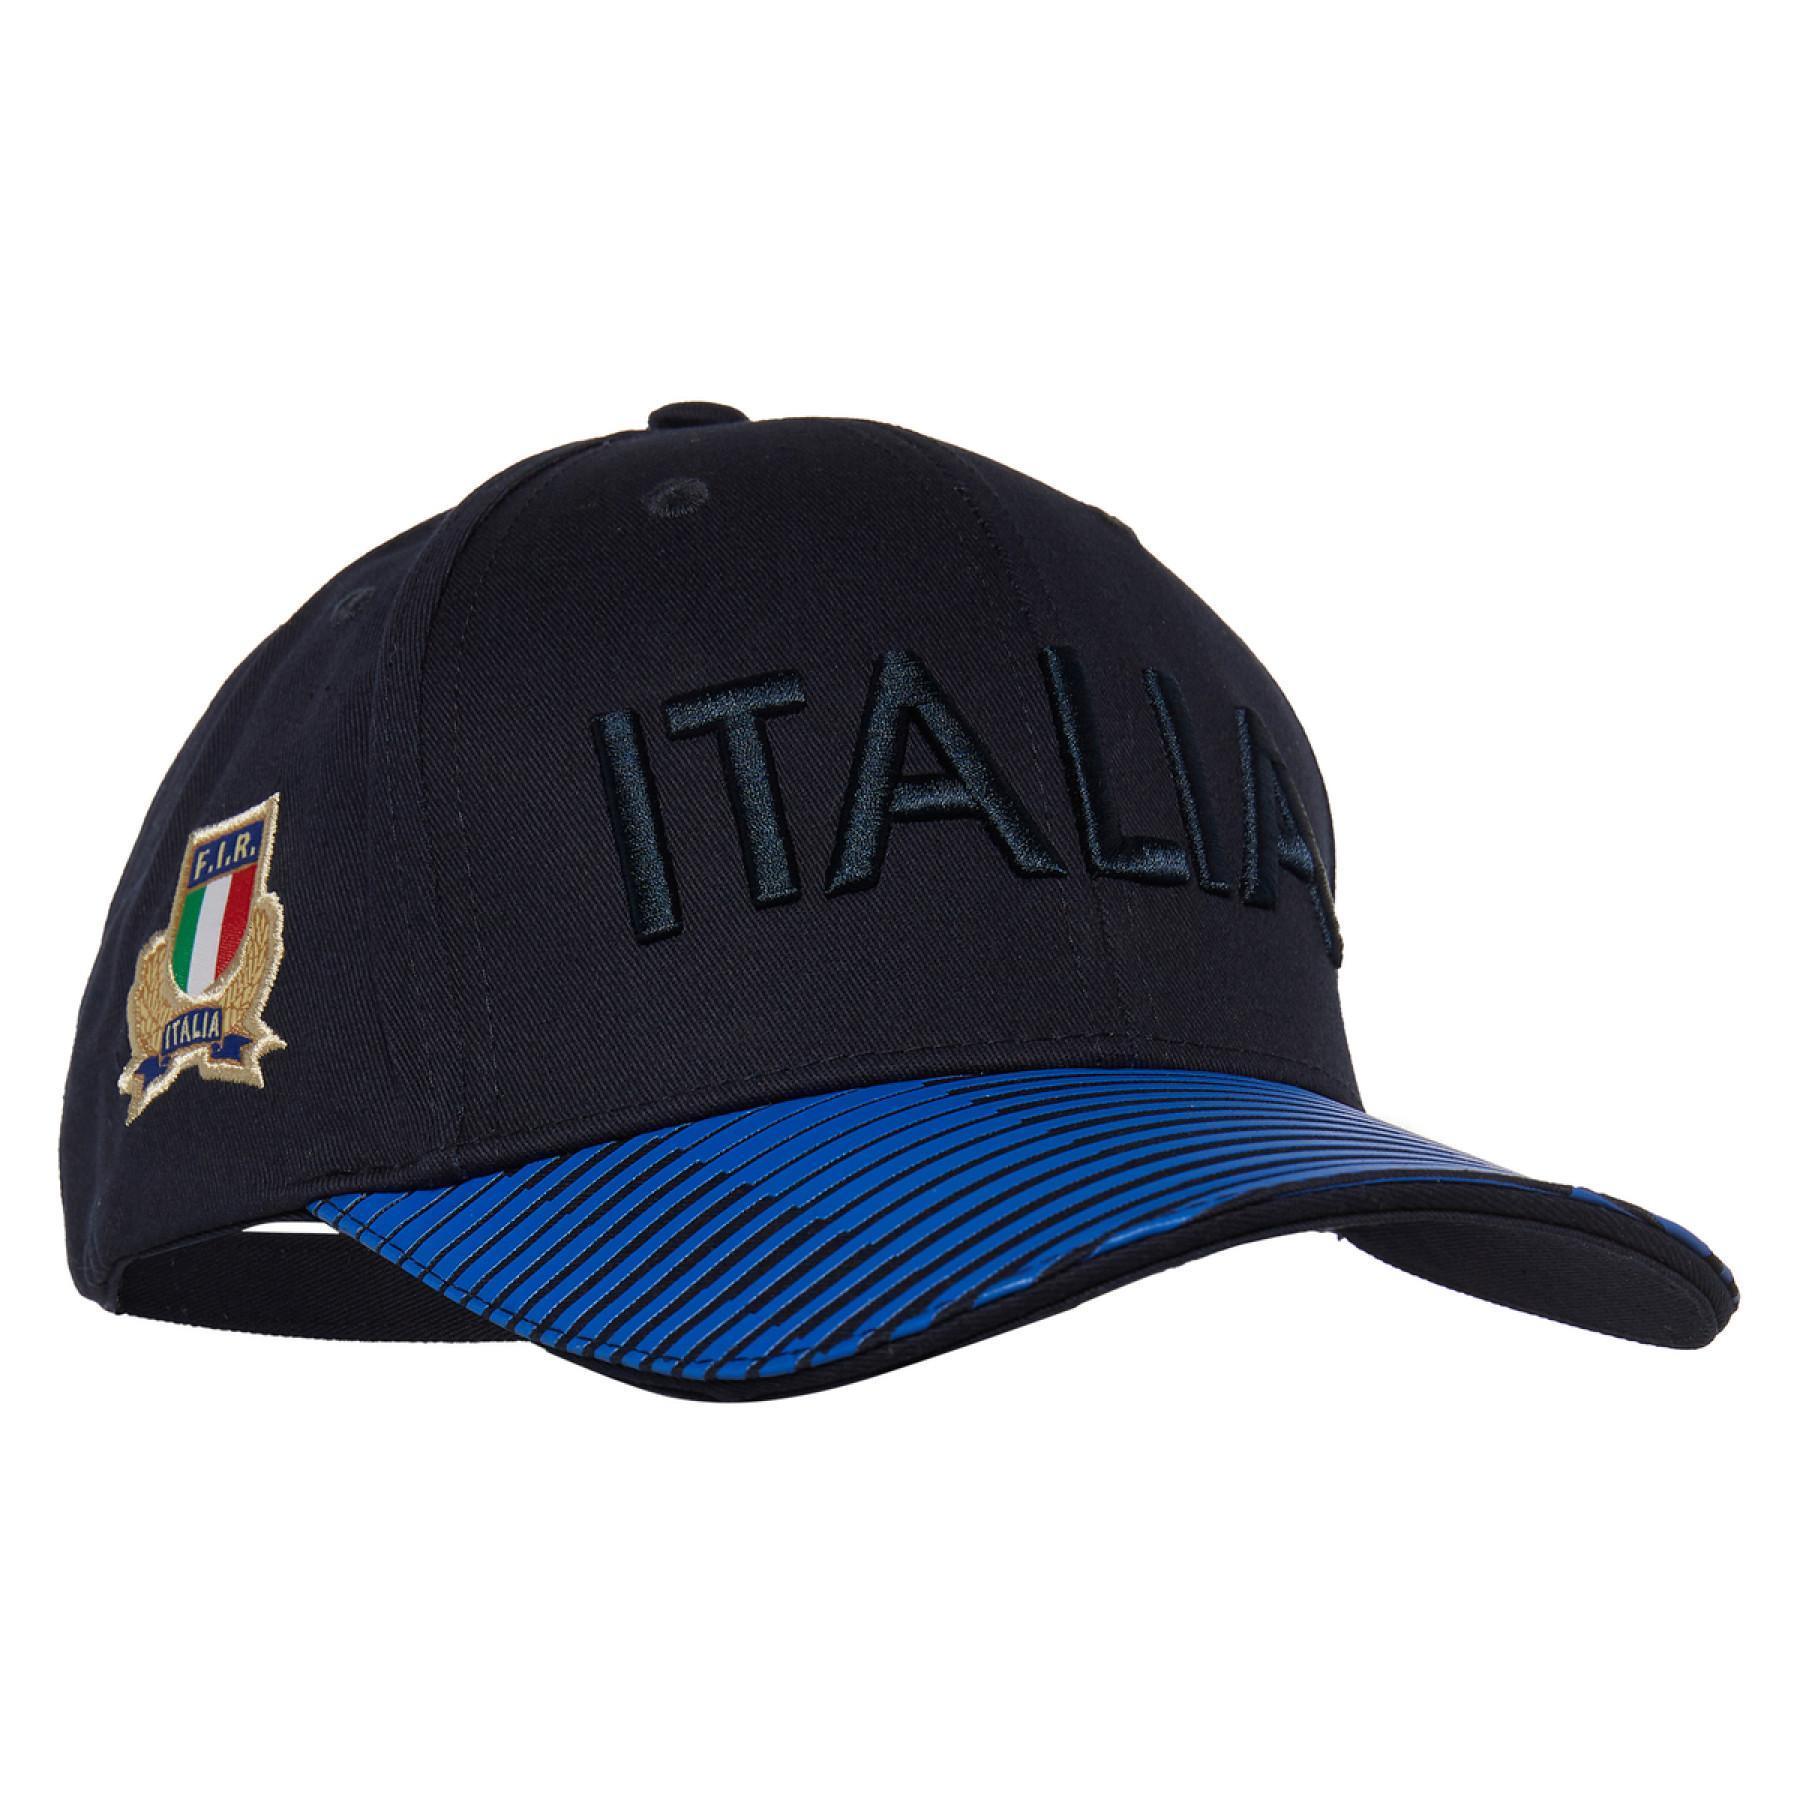 Reise-Baseballmütze Italie rugby 2019